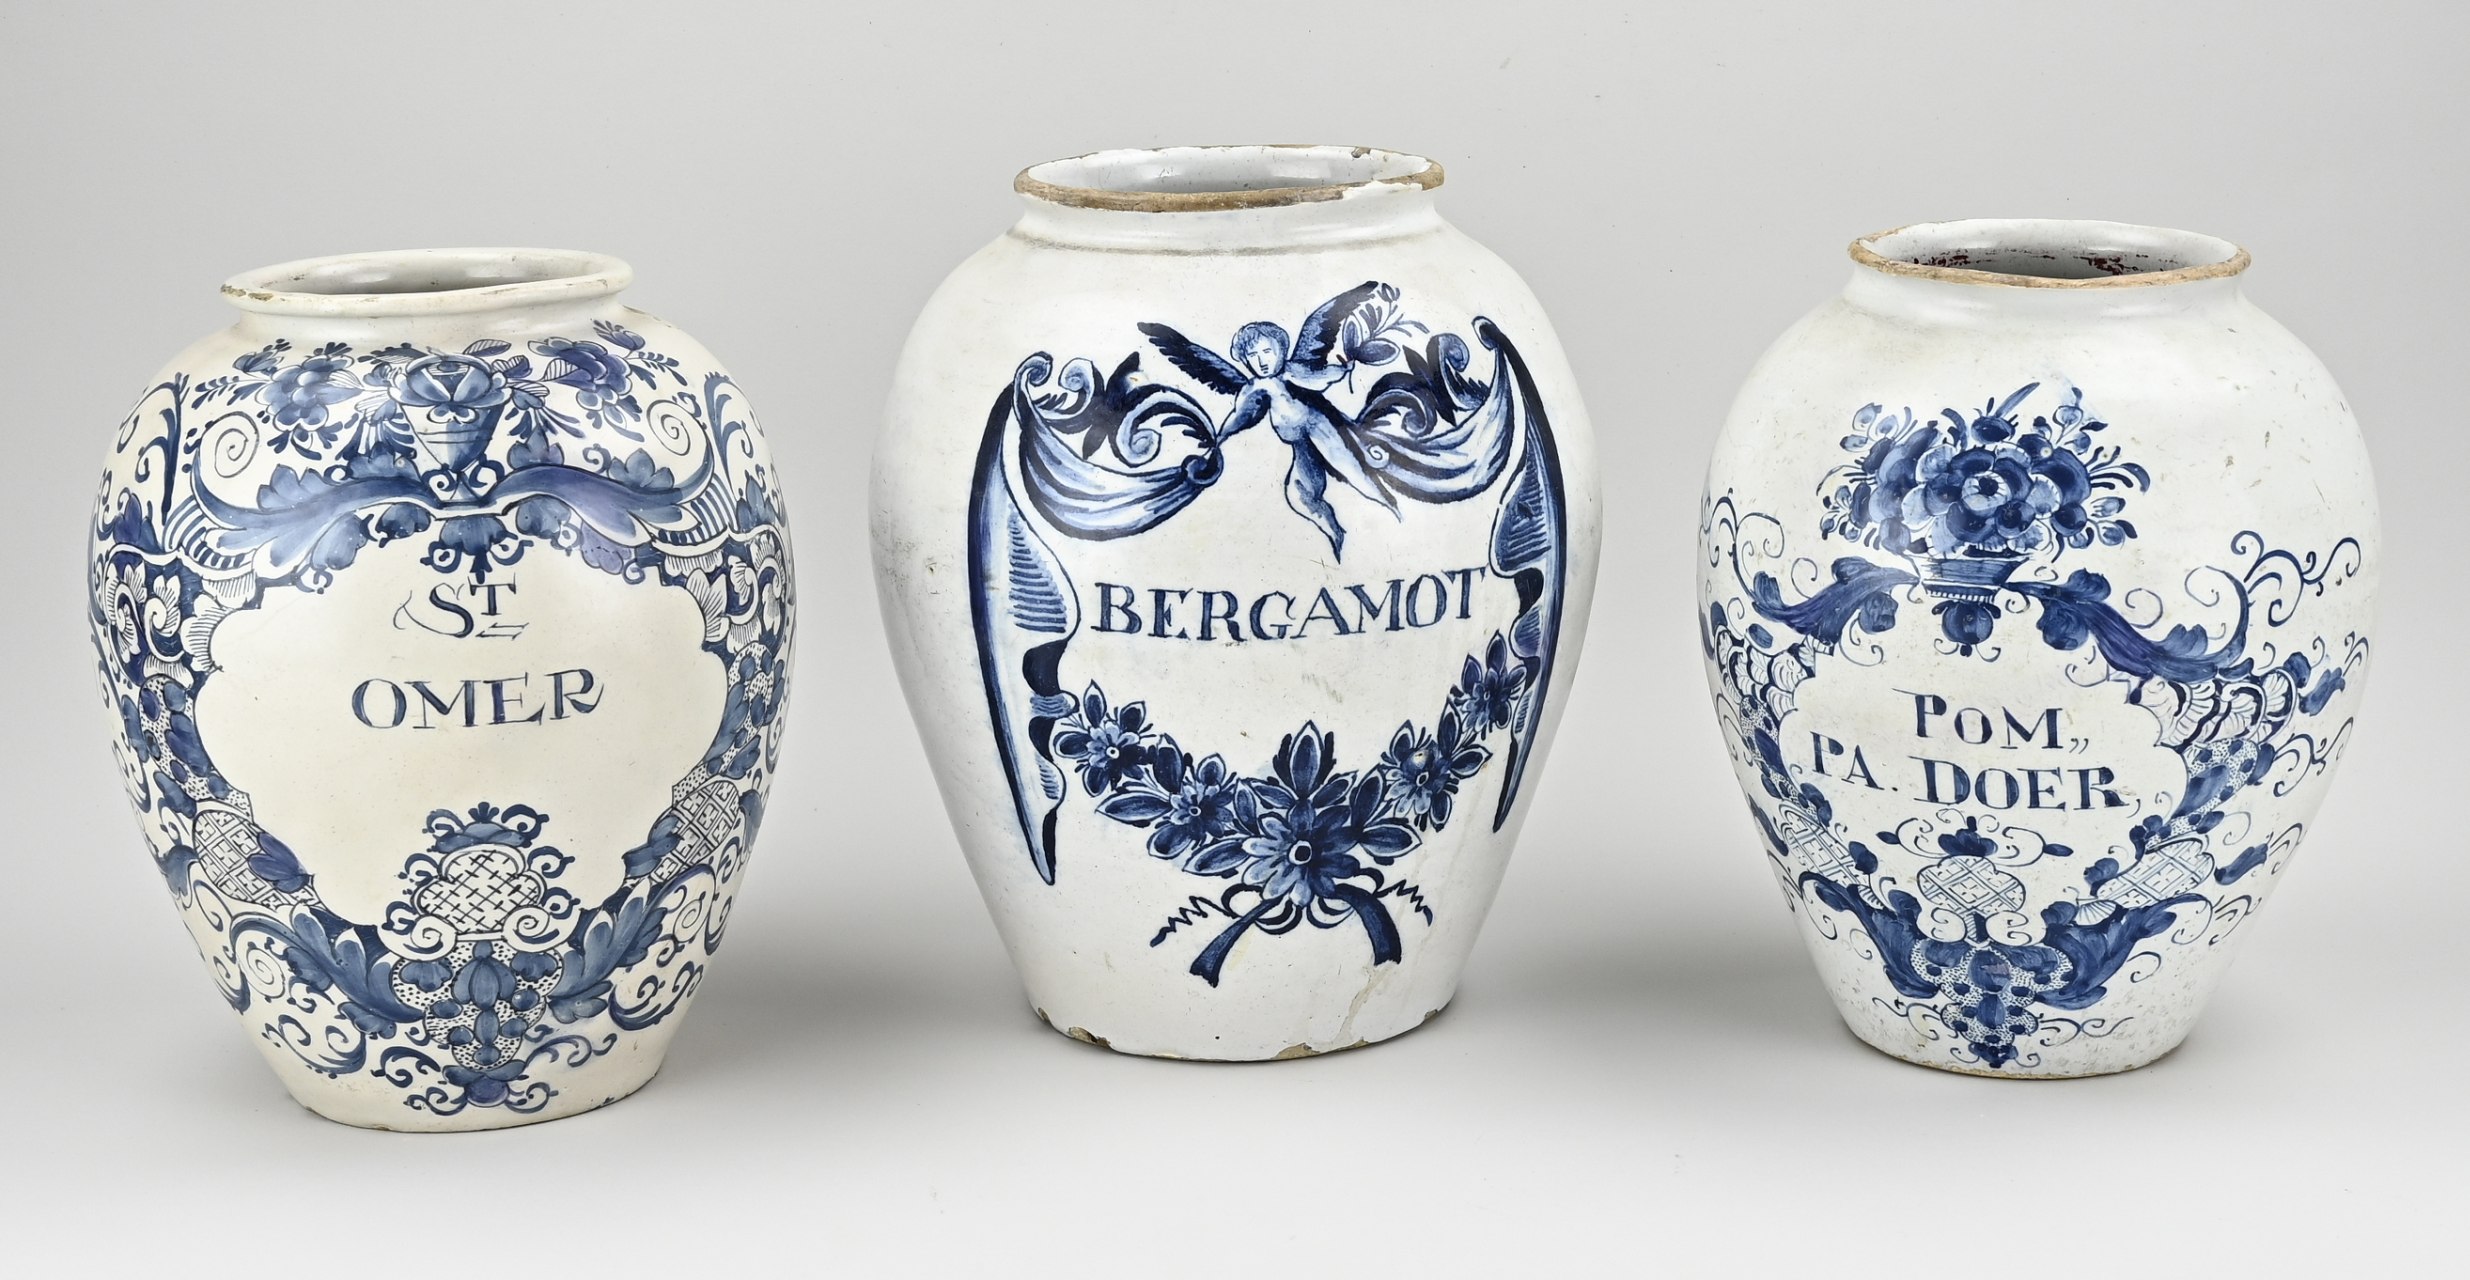 Three rare 18th century Delft fayence tobacco jars. 1x St. Omer, the three bells. 1x Pom. Dad. Doer (by Duyn). 1x Bergamot (three bells)